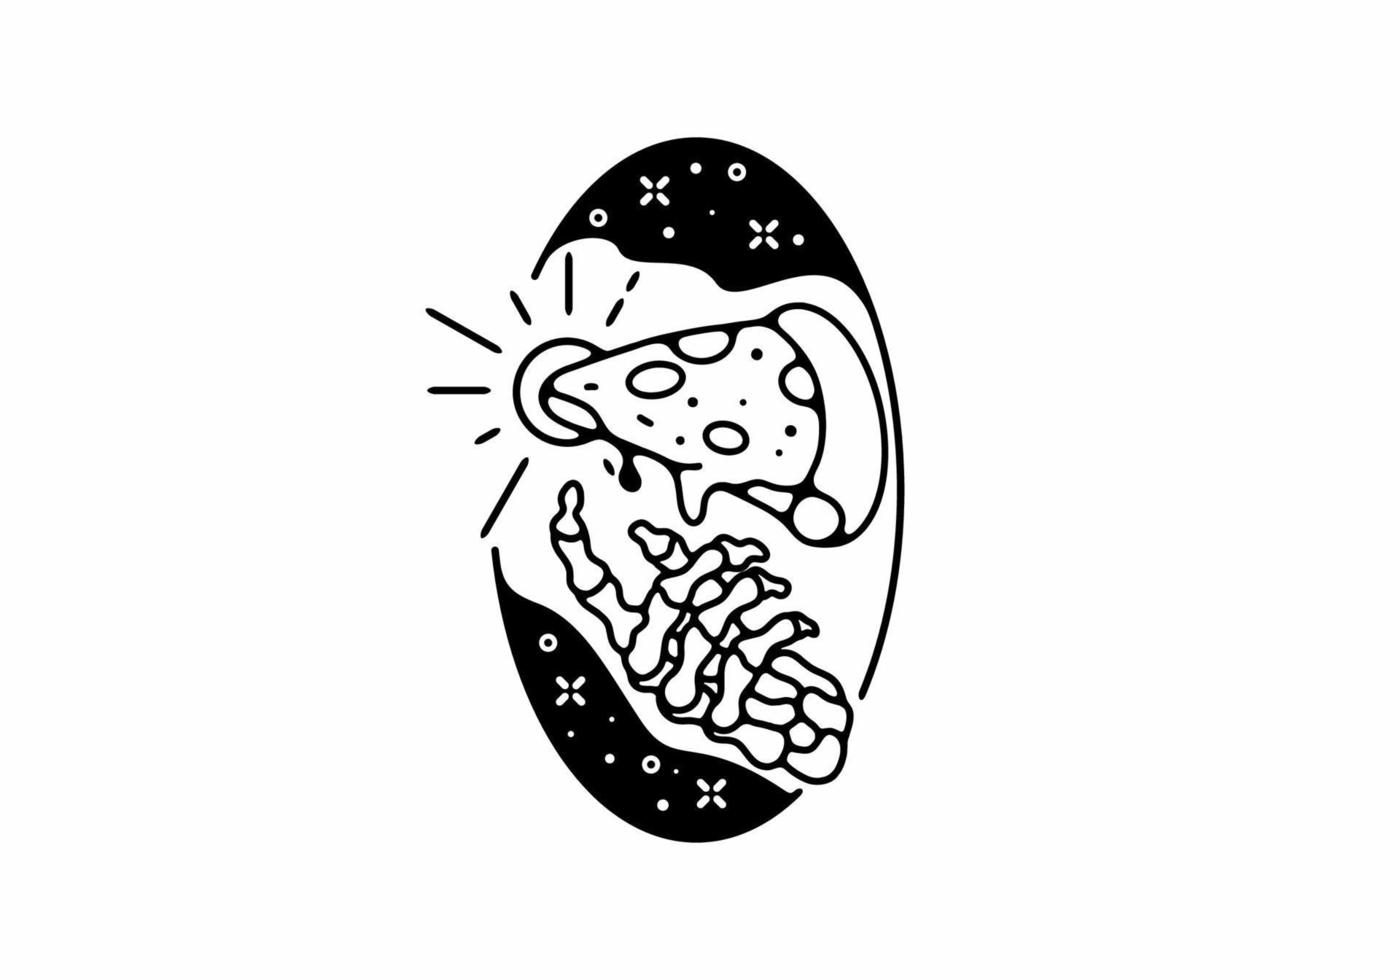 Black line art illustration of skeleton hand and pizza vector